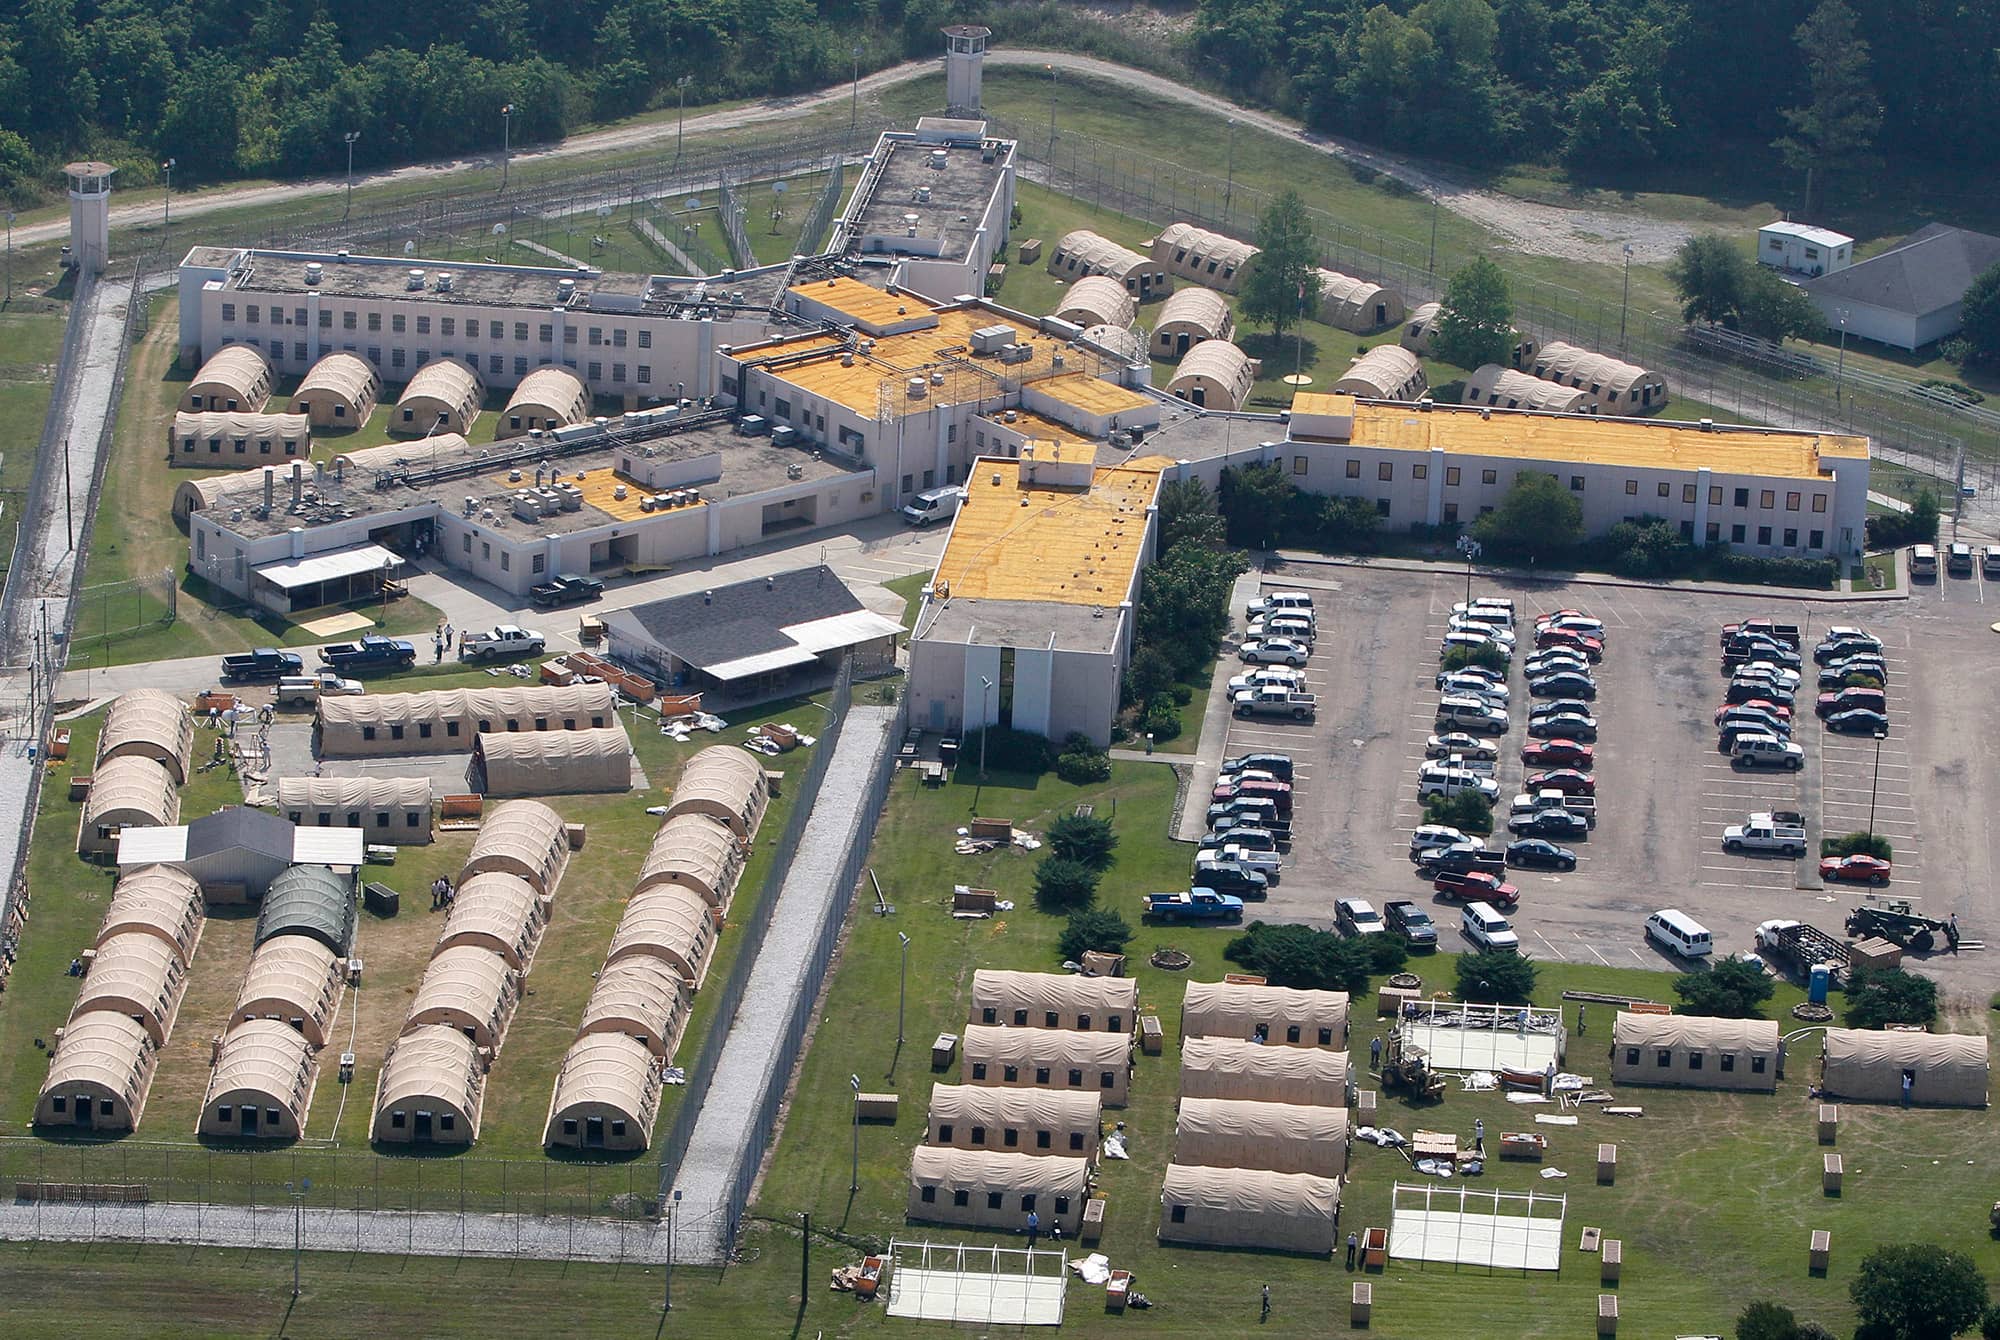 The Louisiana State Penitentiary at Angola, LA